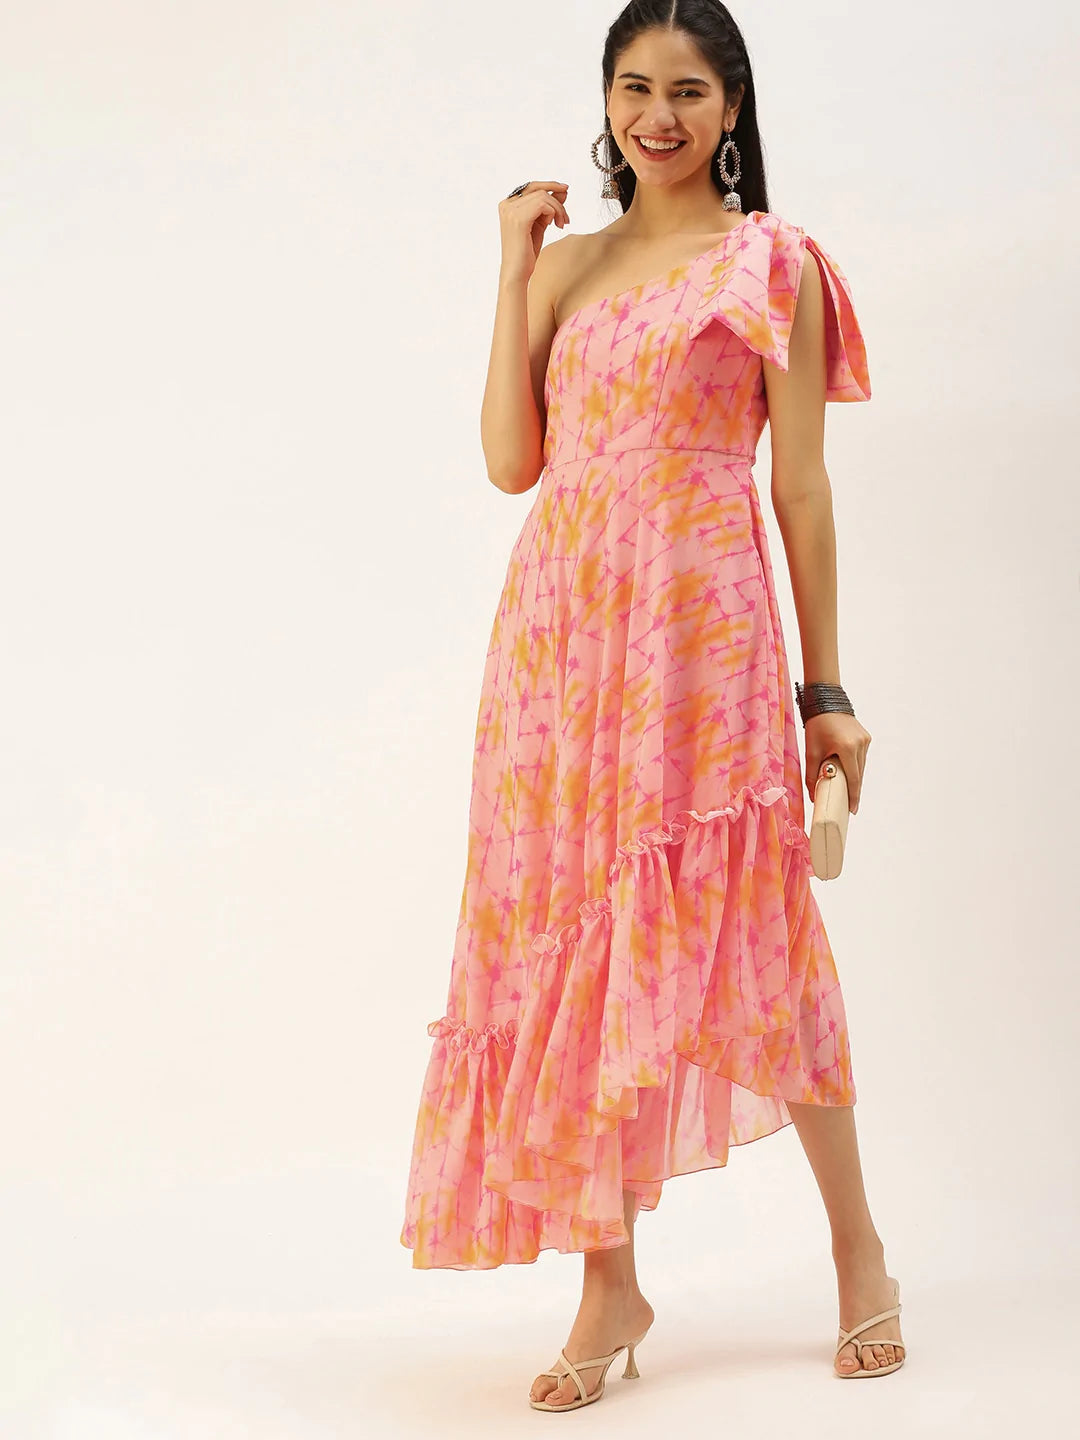 Multicolored-Digital-Printed-Dress